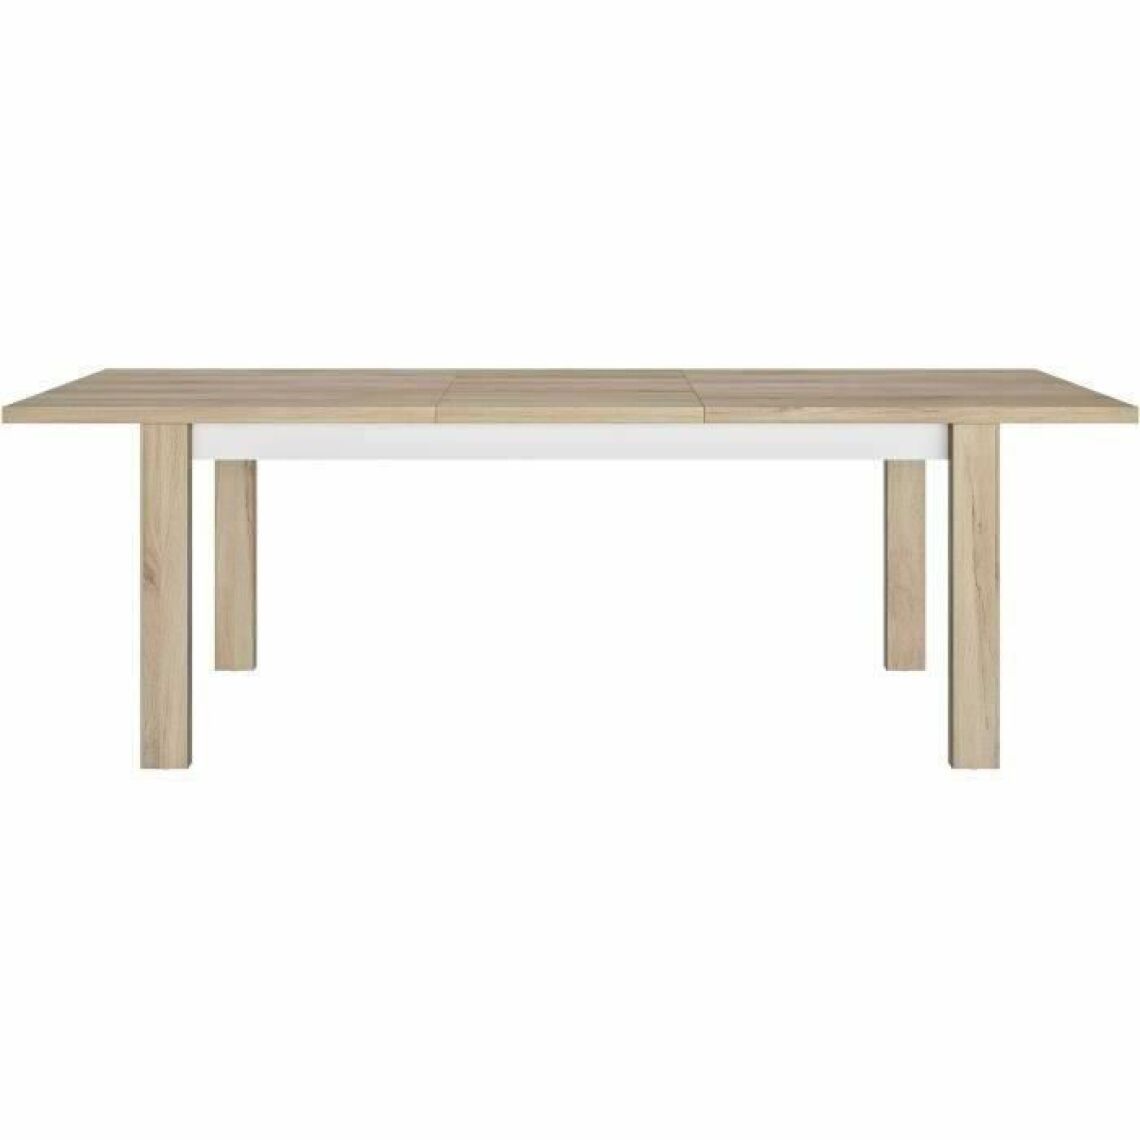 Gami - GAMI - Table avec allonge - Décor chene - L 180/240 x P 90 x H 70 cm - Made in France - OLERON - Tables à manger